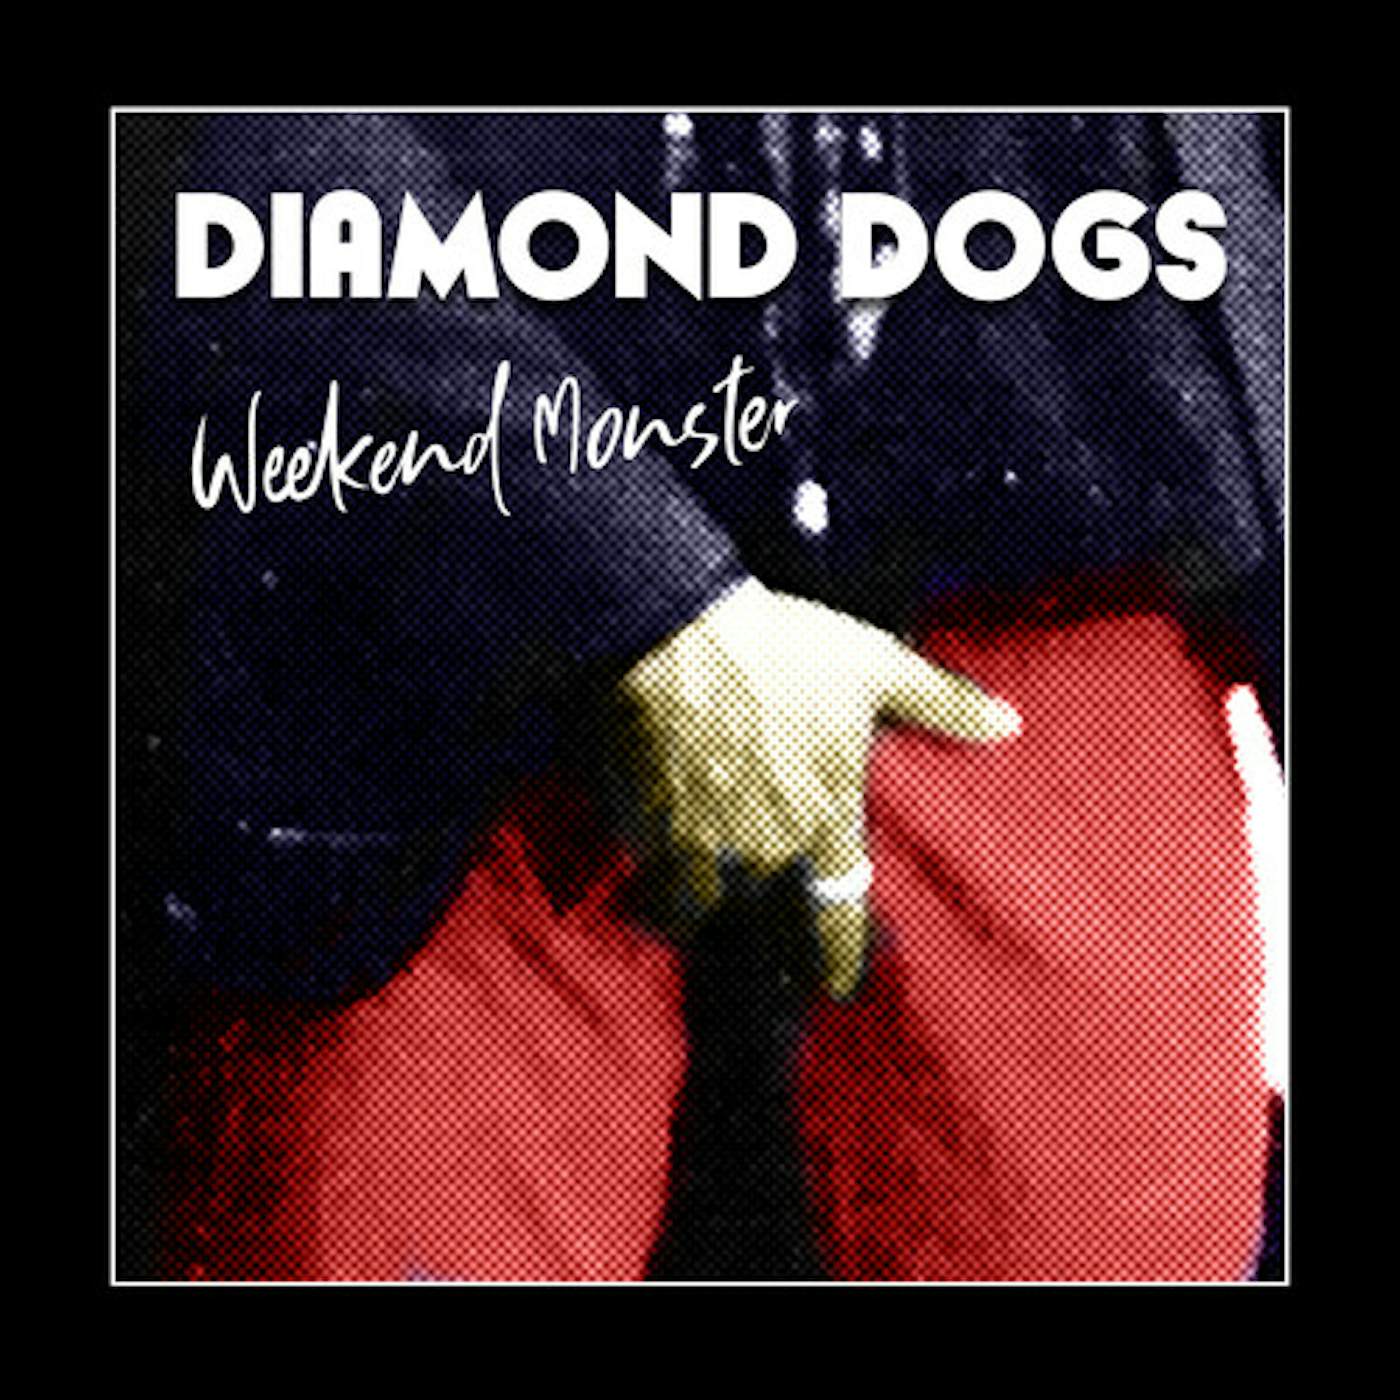 Diamond Dogs WEEKEND MONSTER CD